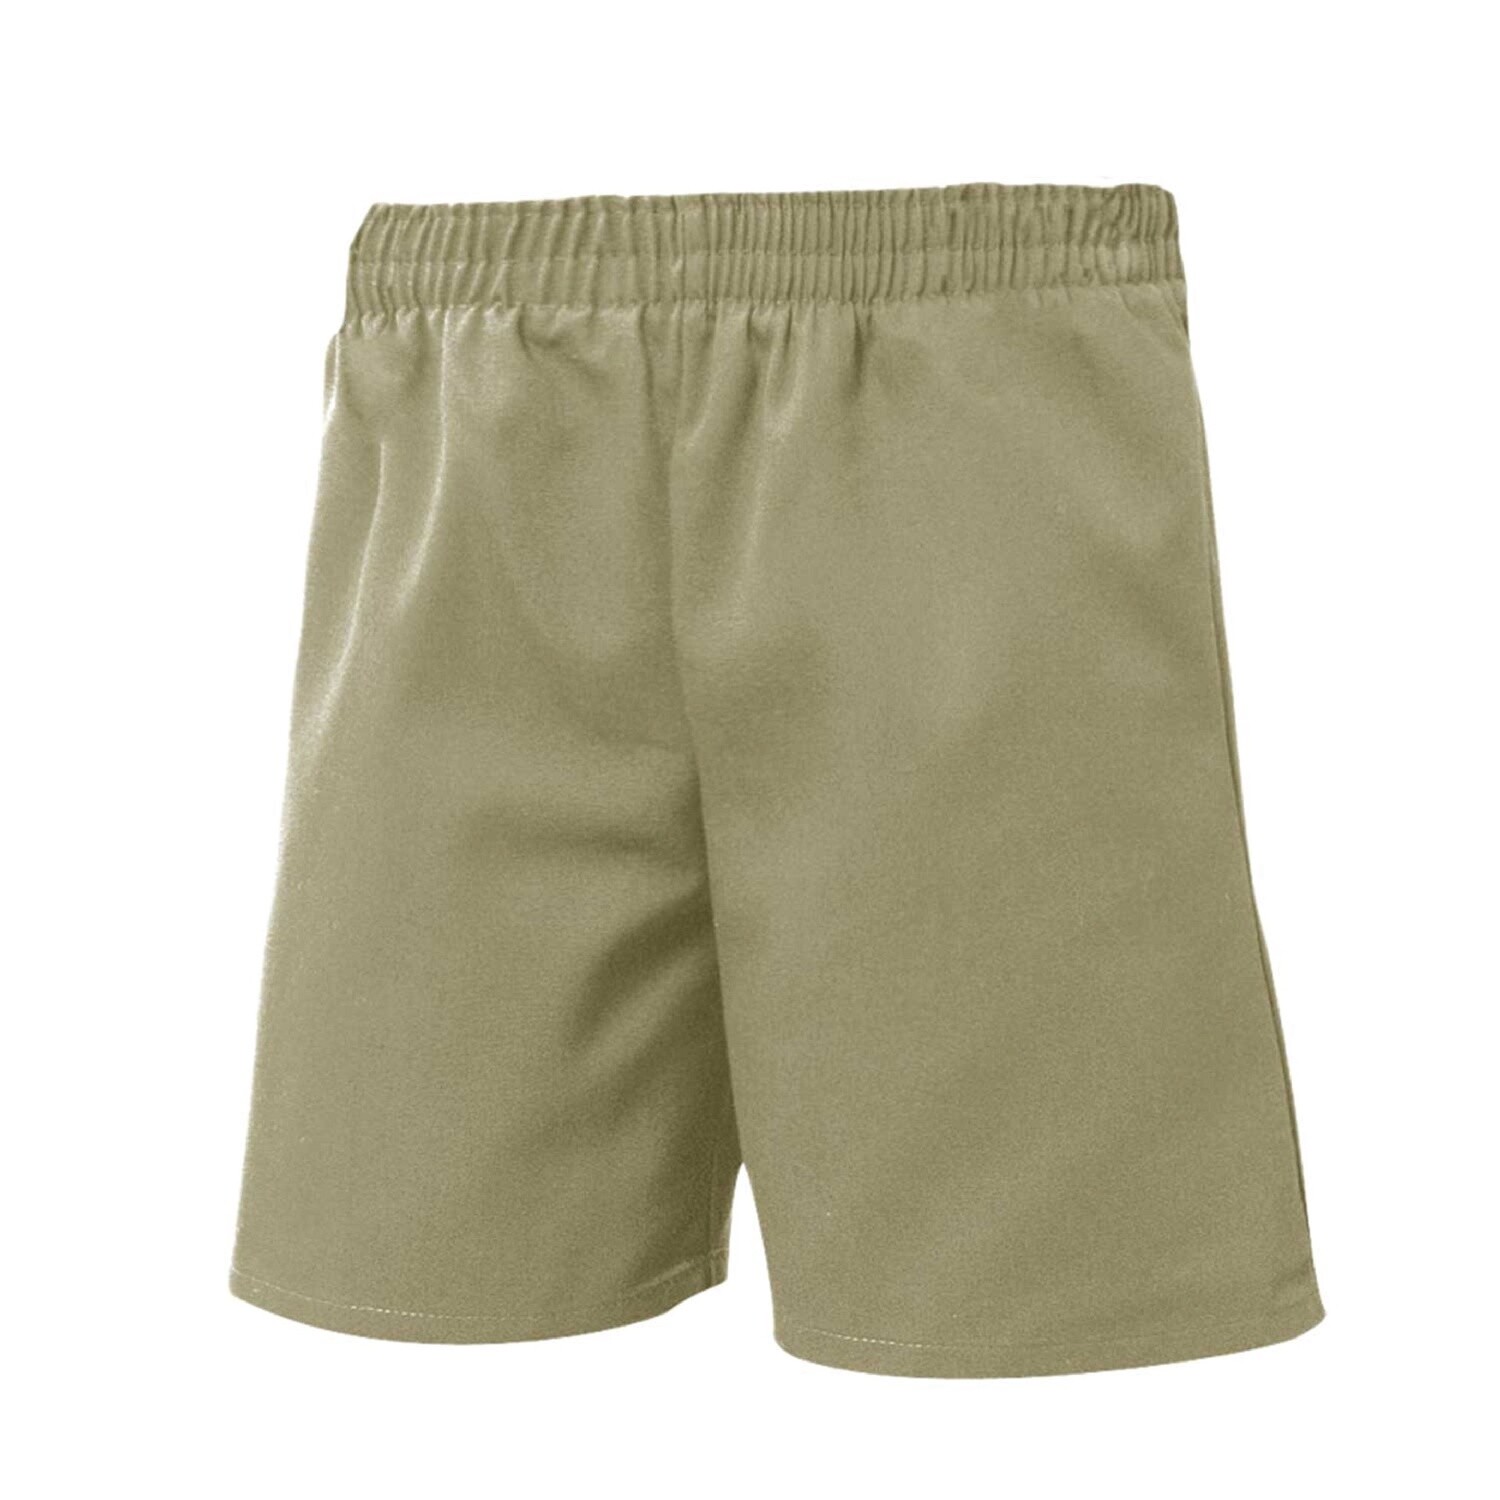 Uniform shorts - Elastic waist - Youth, style: Elastic Waist#7067, Size: YXXS